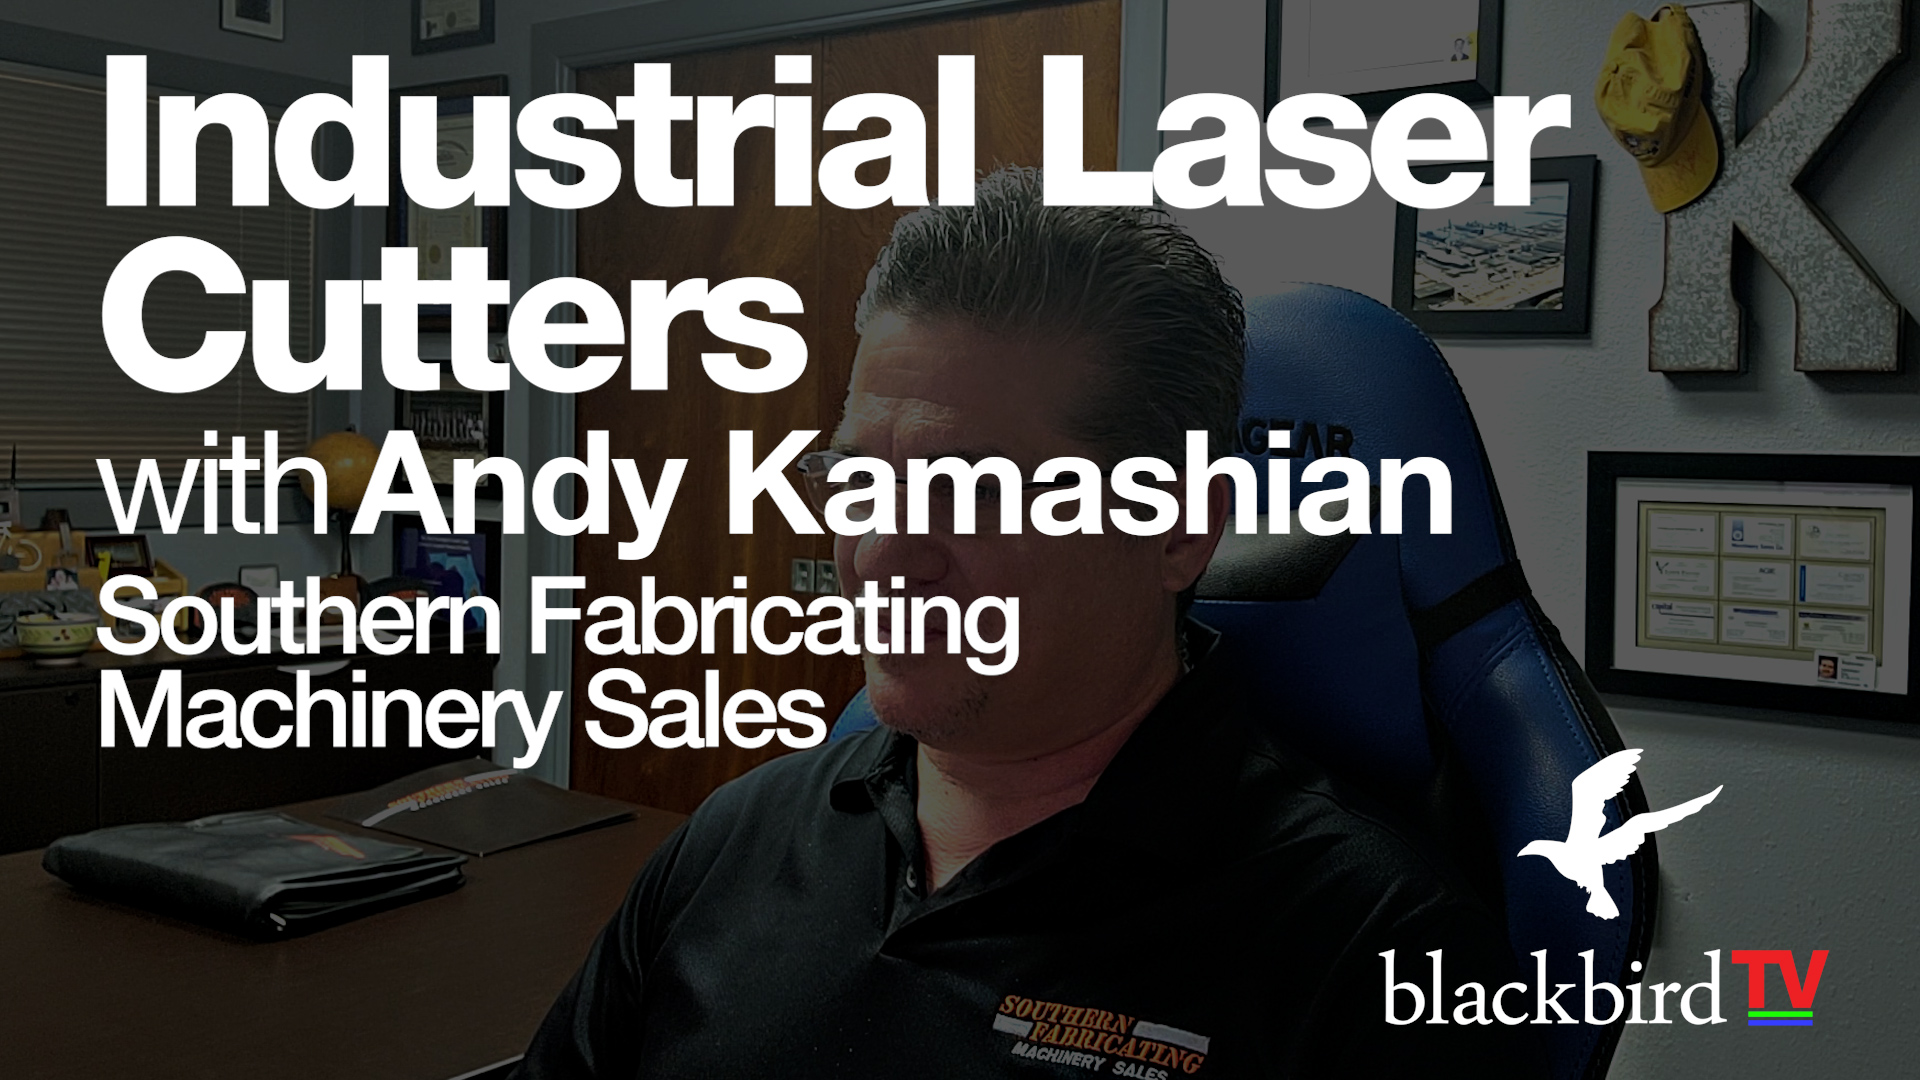 Industrial Laser Cutters